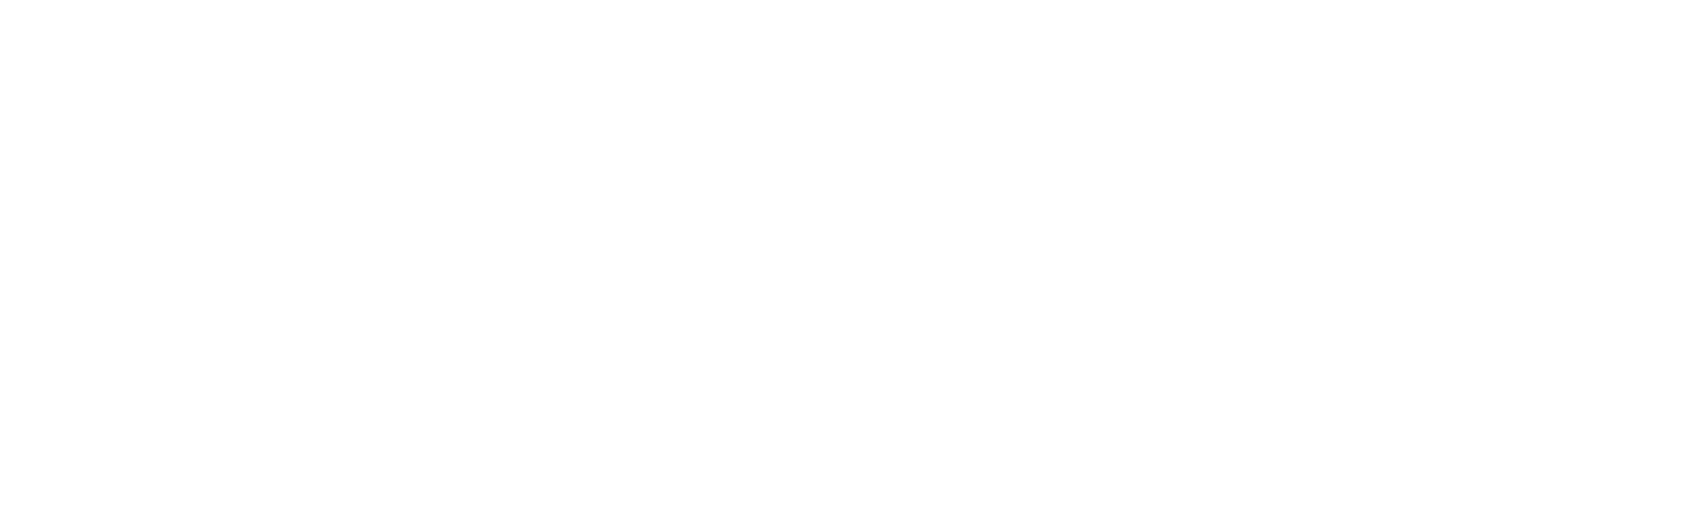 pn-landscape-logo-logo-tagline-reverse-rgb